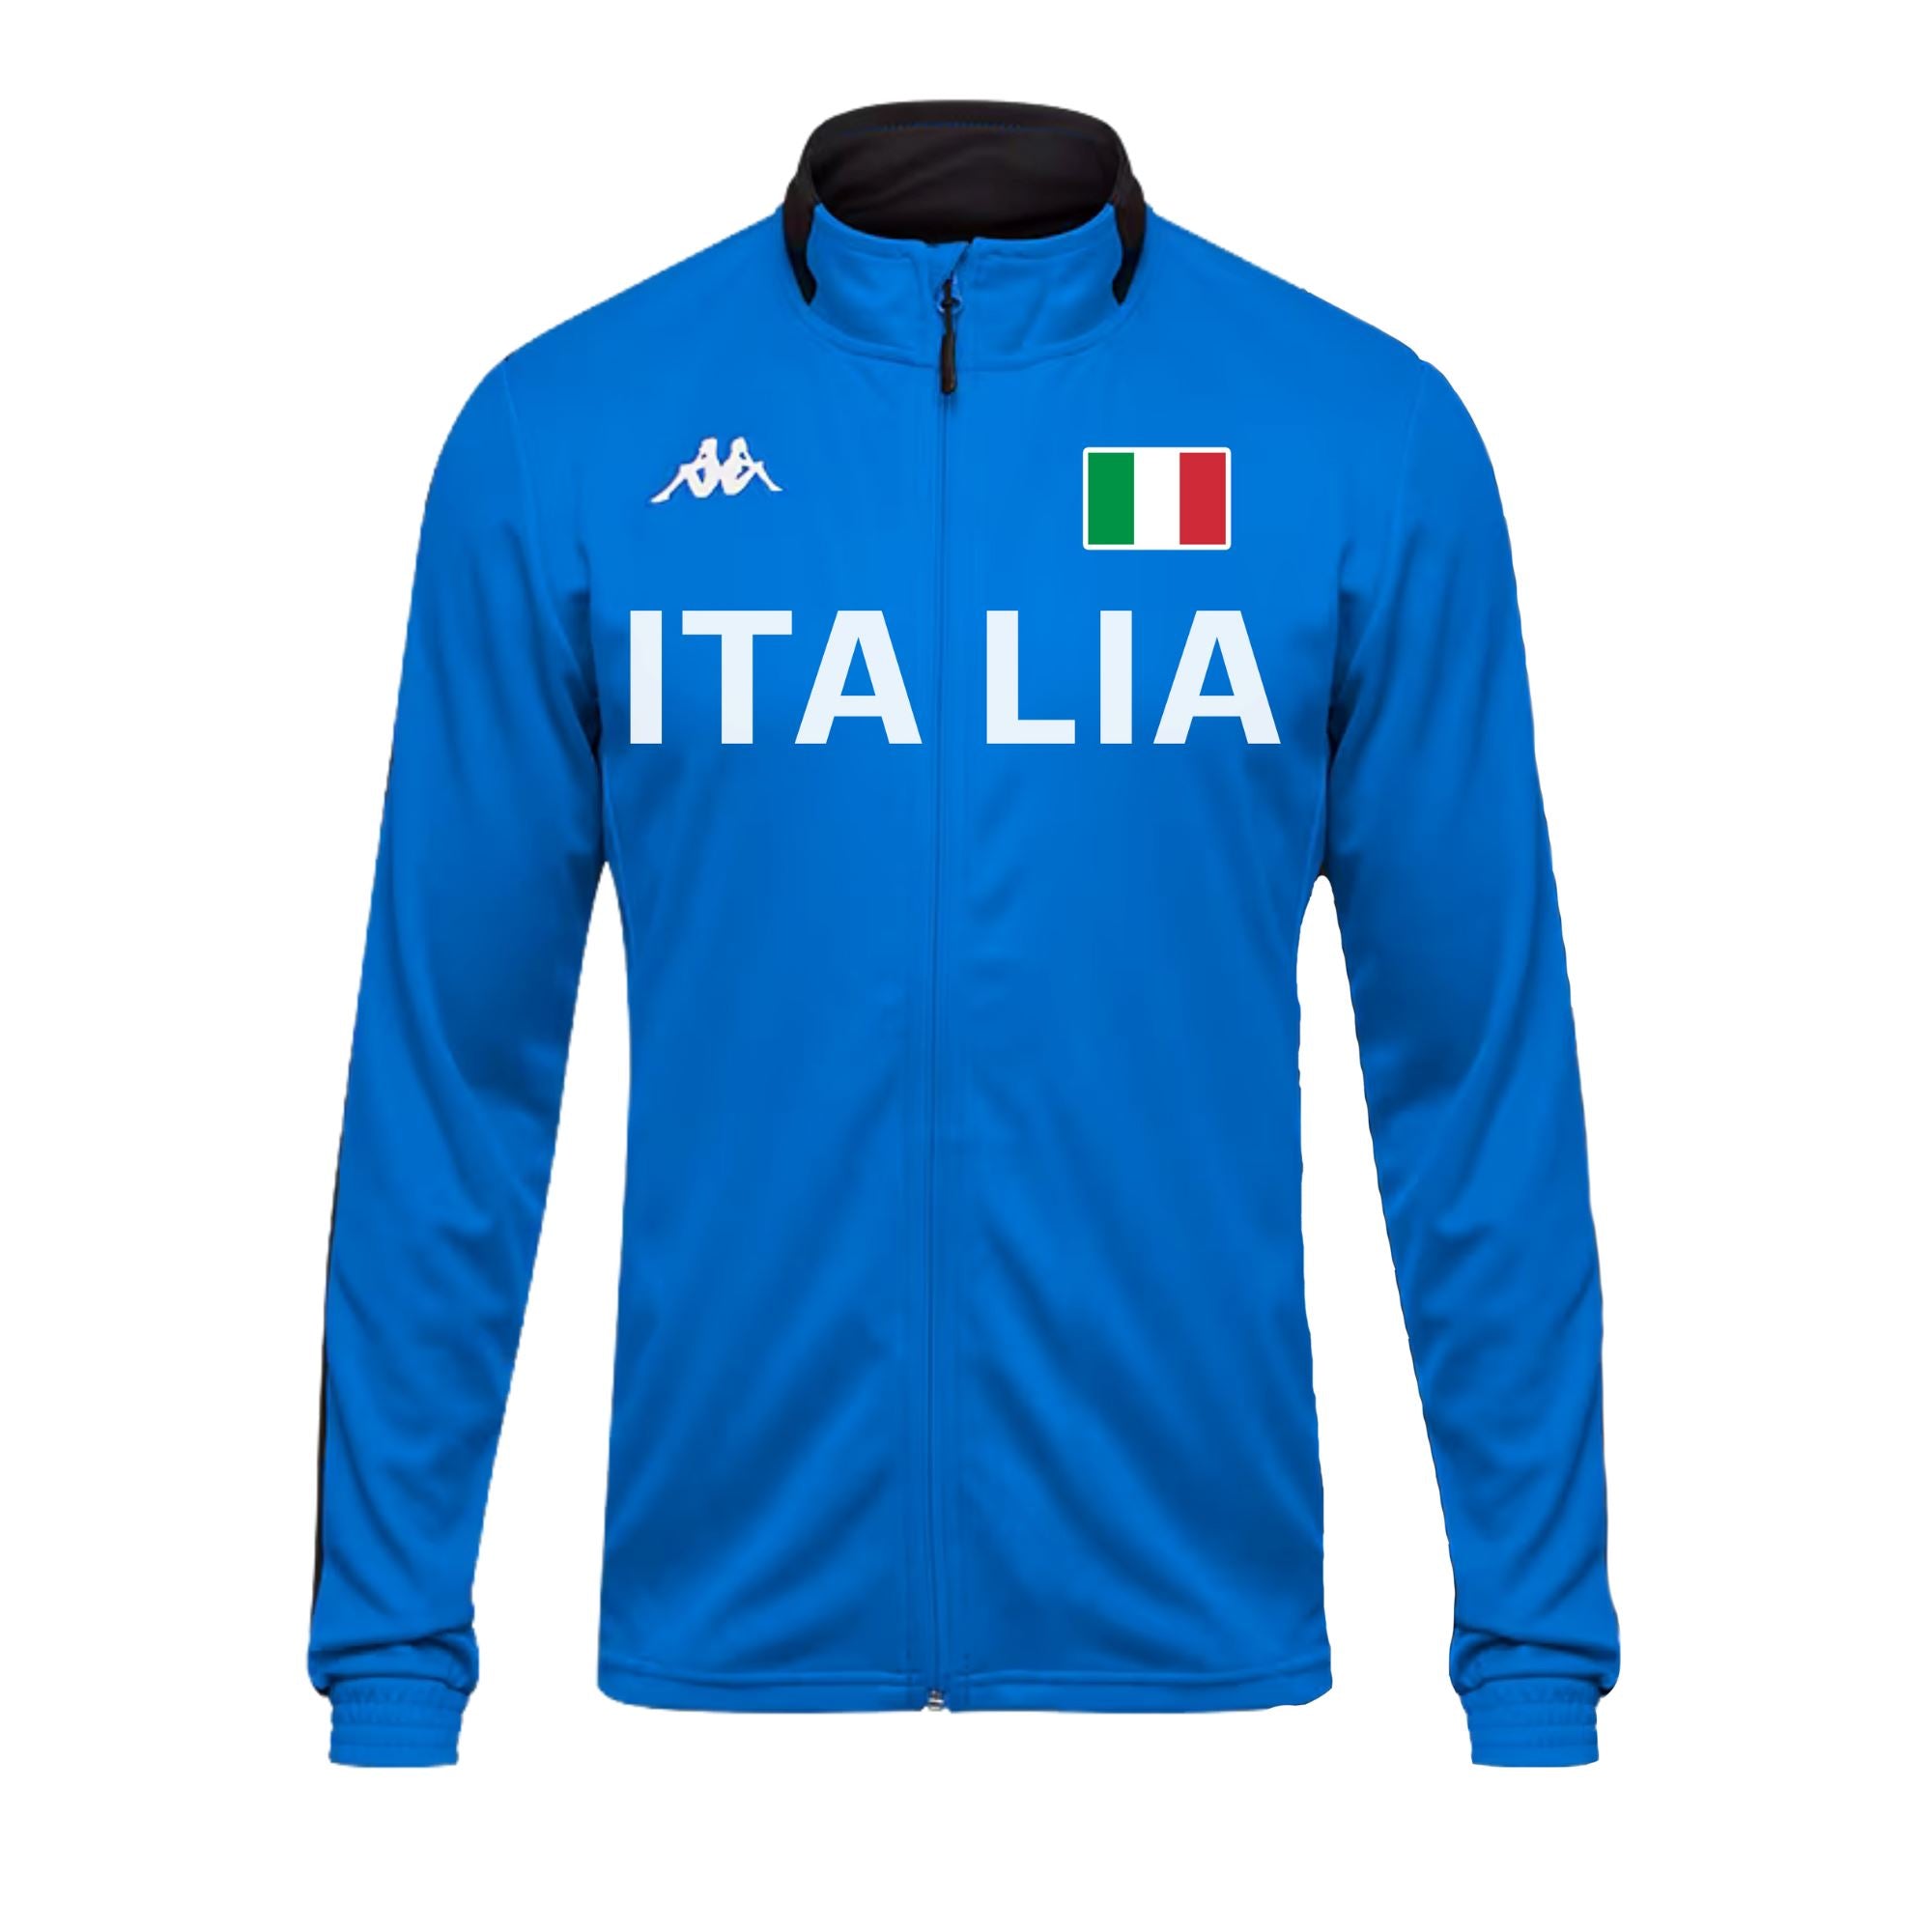 Kappa Sport Italia Salcito Full Zip Jacket - Kappa